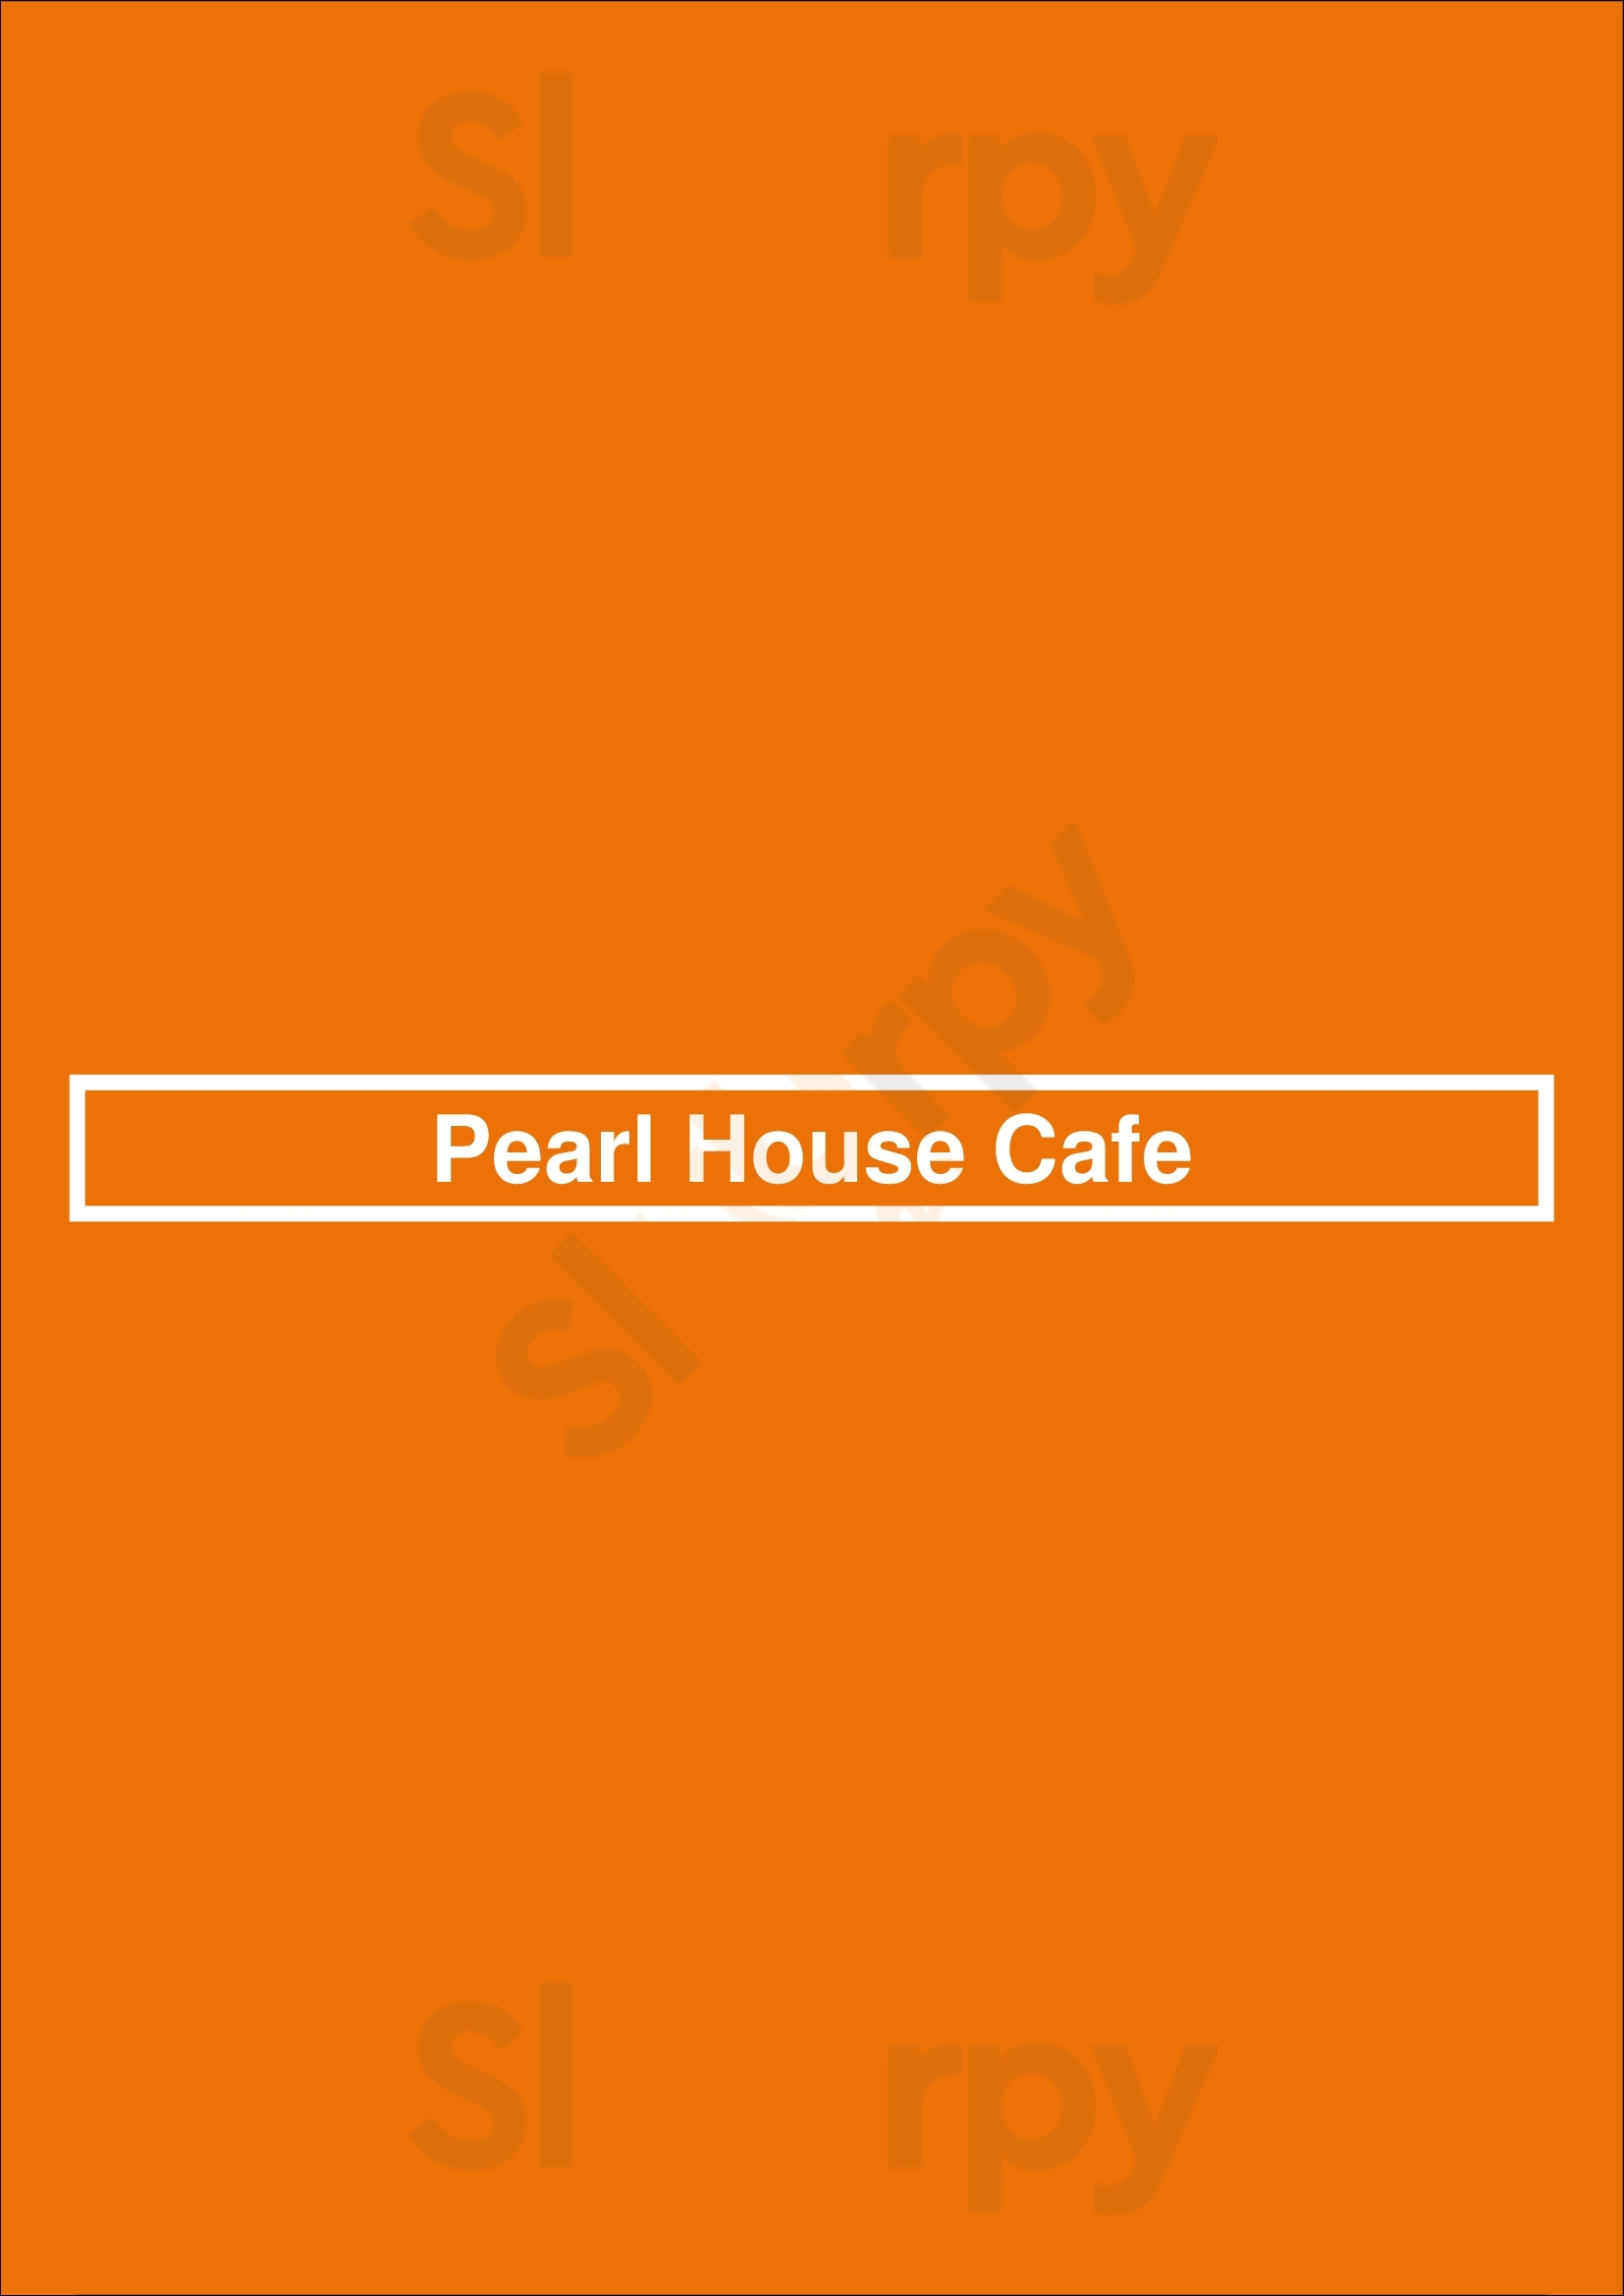 Pearl House Cafe Calgary Menu - 1